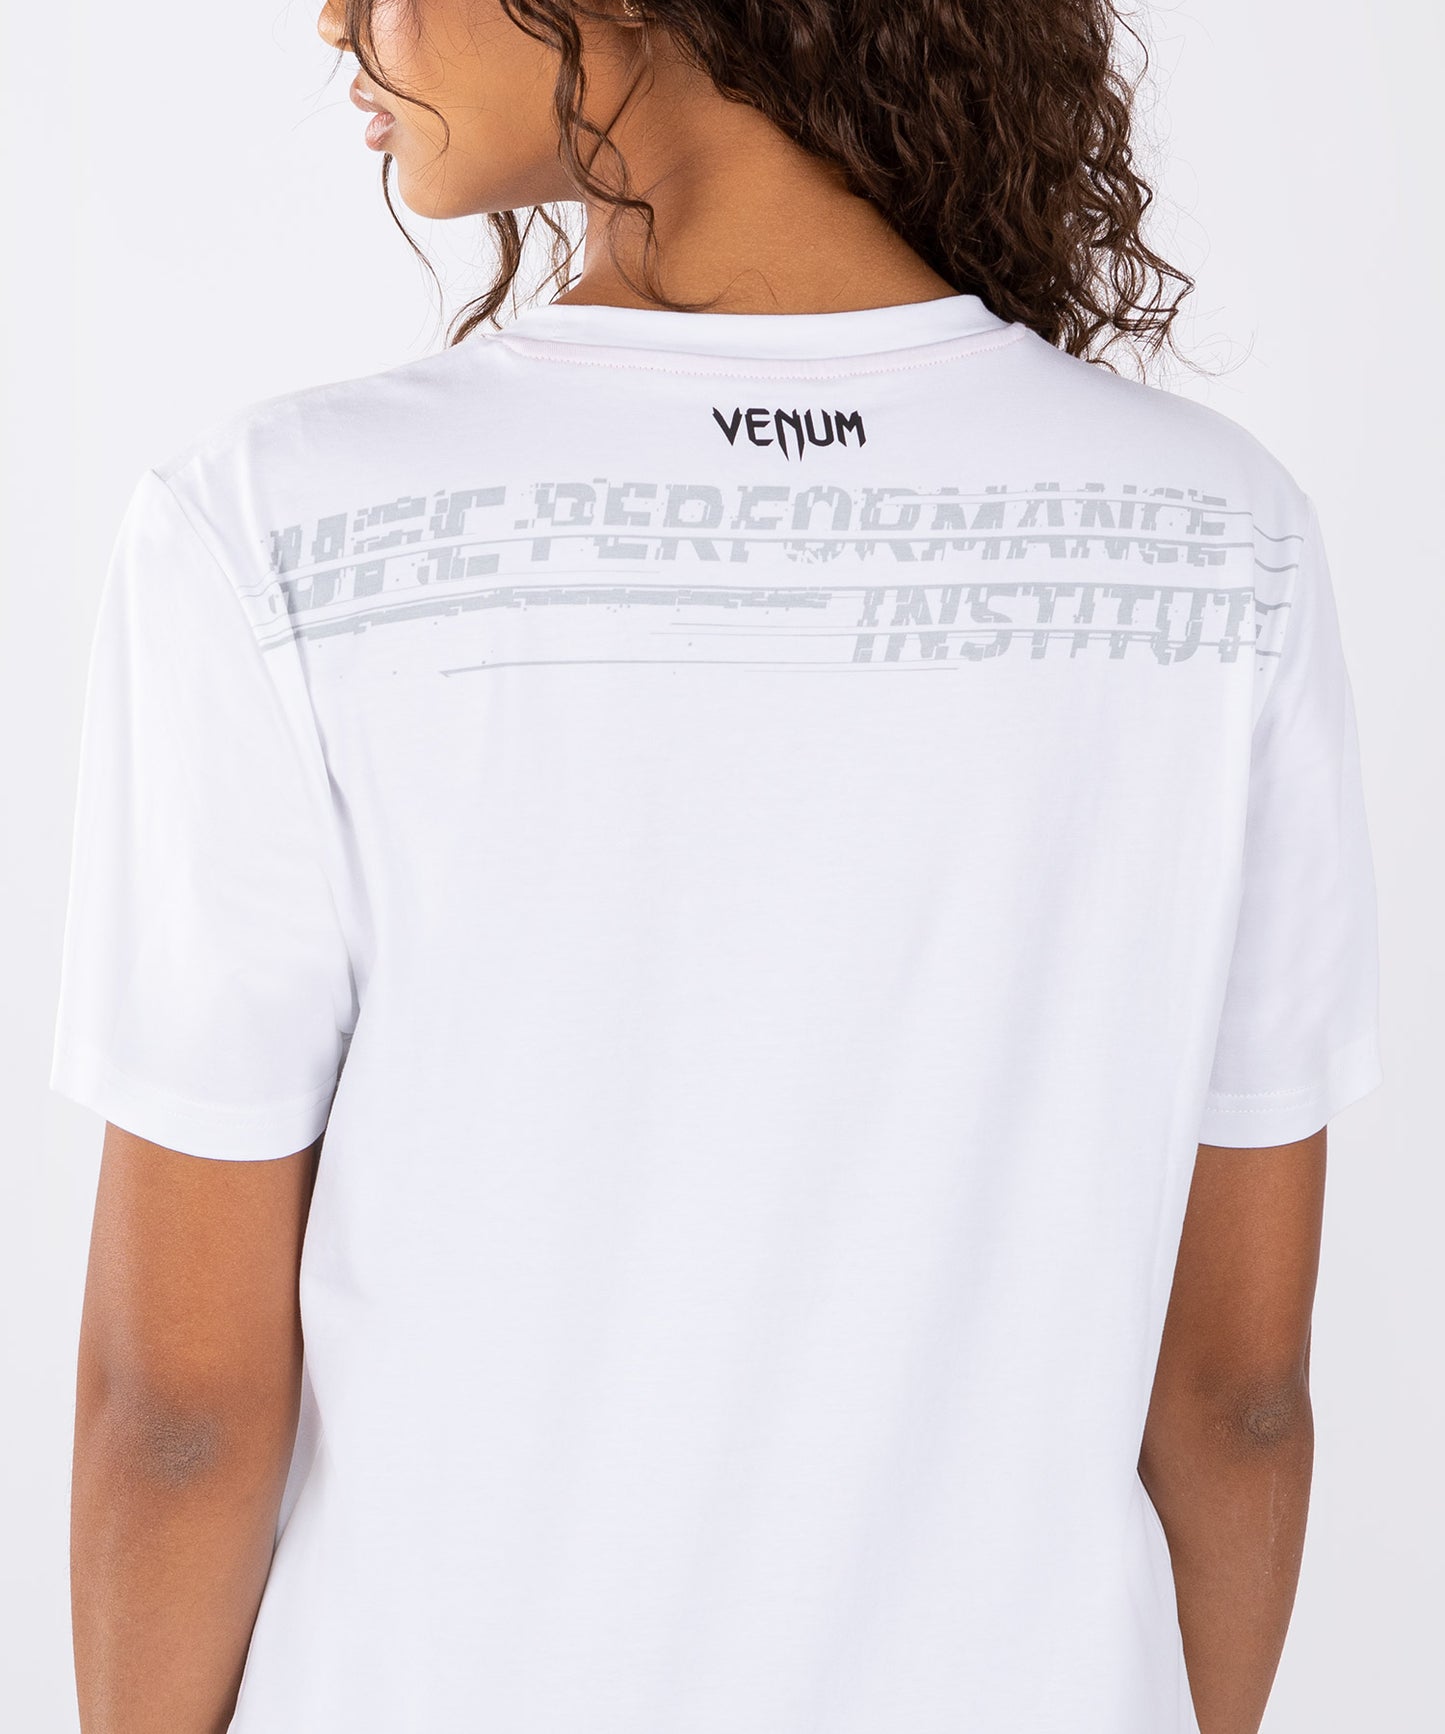 UFC Venum Performance Institute 2.0 Women’s T-Shirt - White